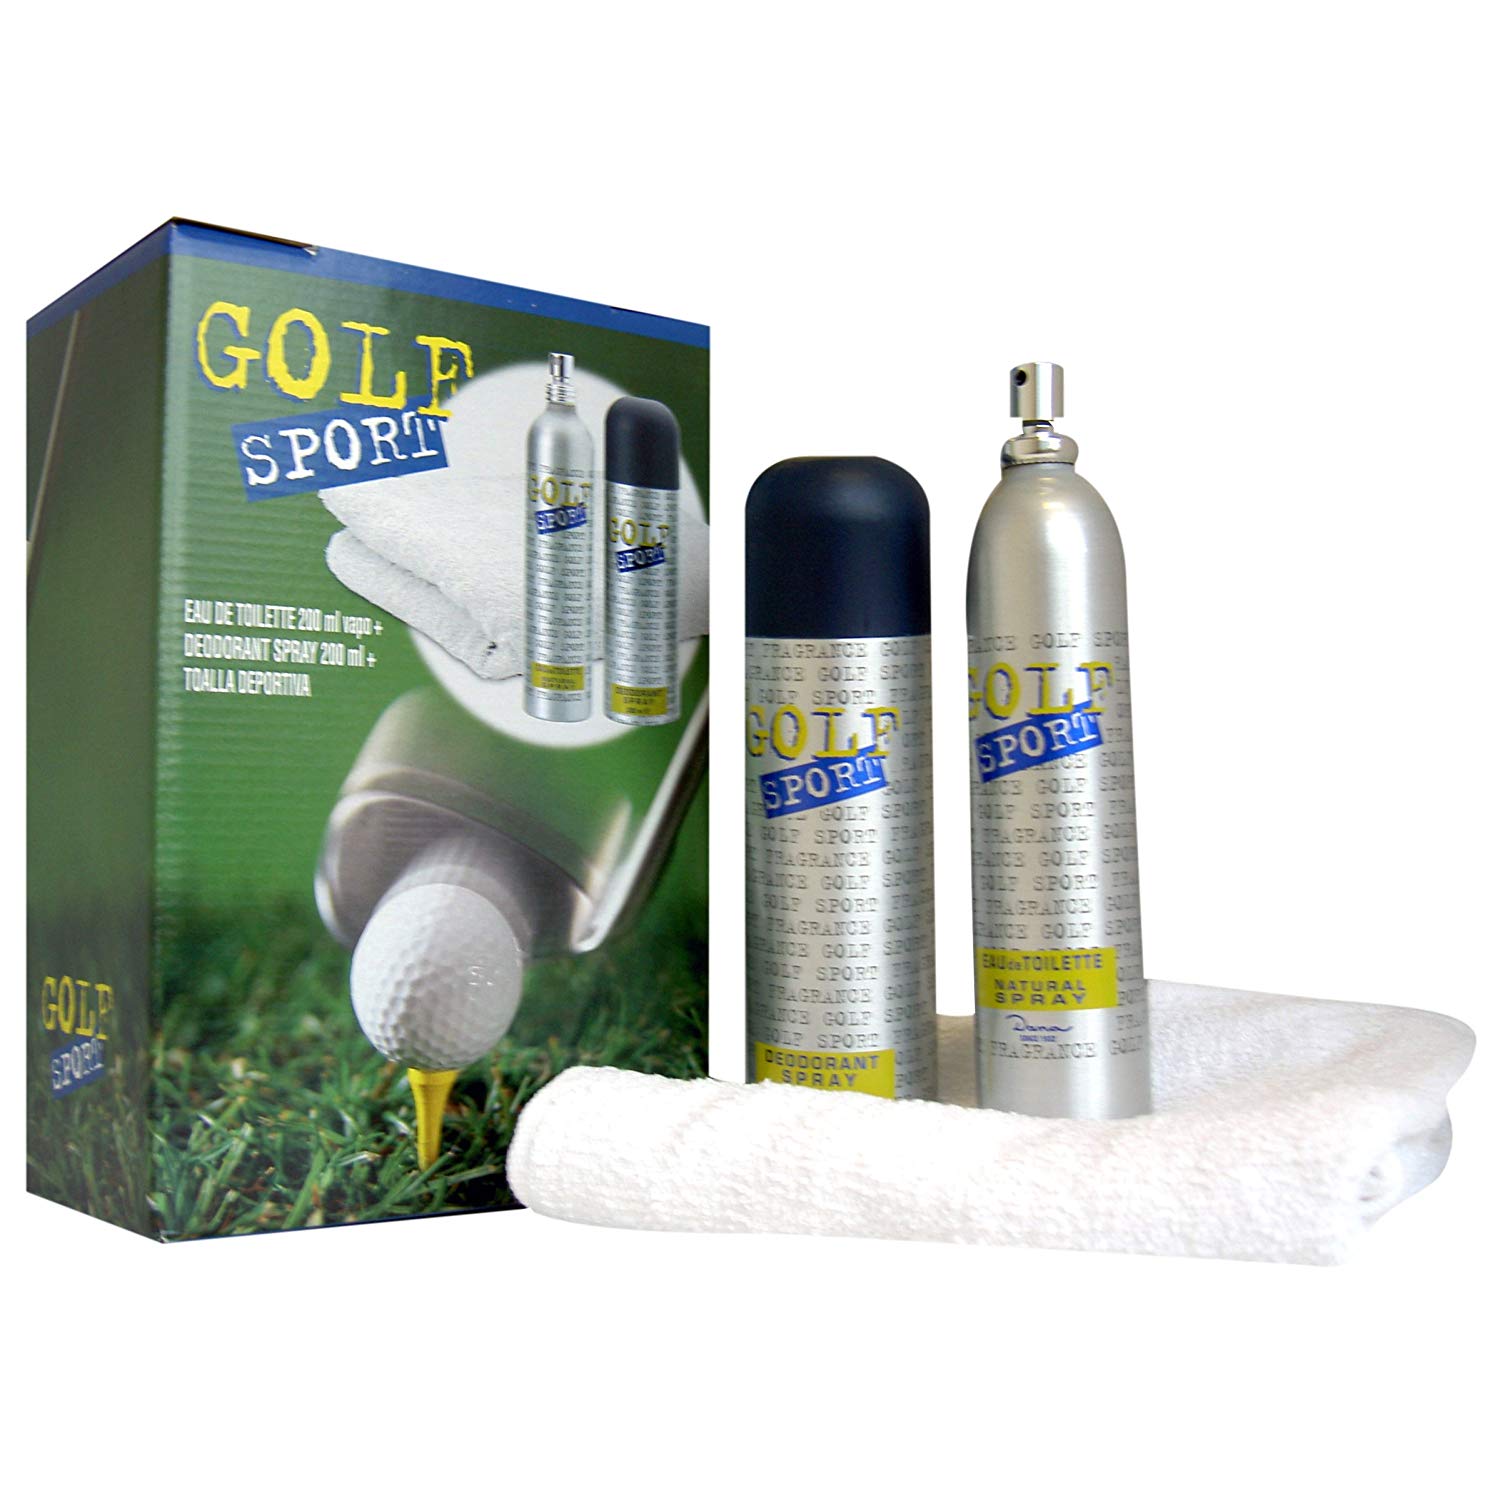 Dana Golf Sport Gift Set 200ml Eau de toilette EDT + 200ml Deodorant Spray + Sports Towel